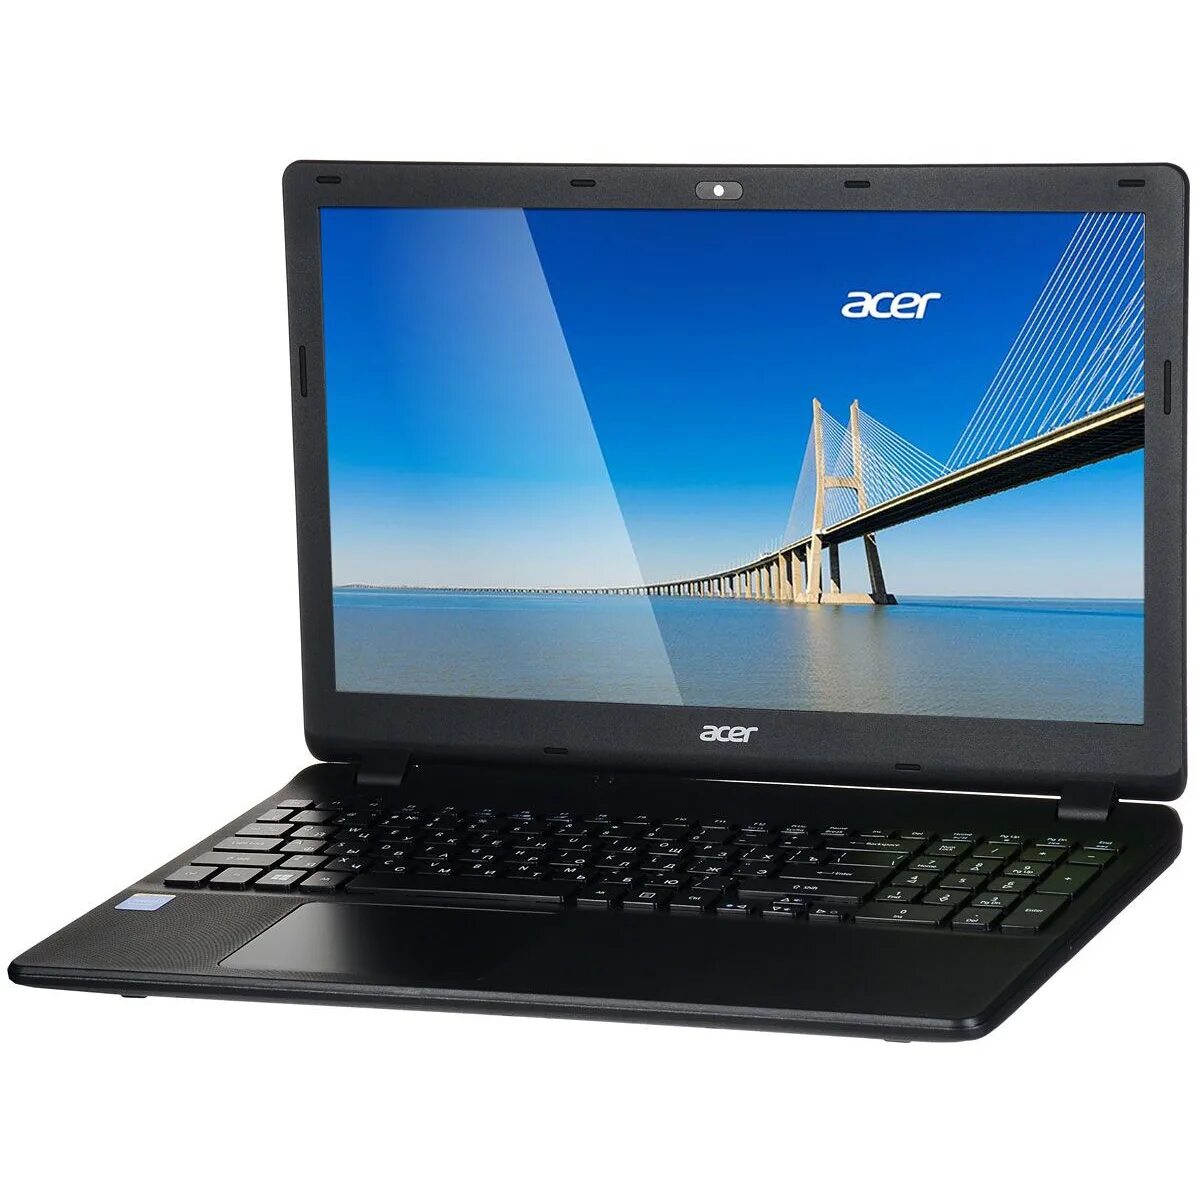 Ноутбук Acer Extensa 2519. Ноутбук Acer ex2540. Ноутбук Acer Extensa ex2519-c5mb. 15.6" Ноутбук Acer Extensa. Aspire n20c5